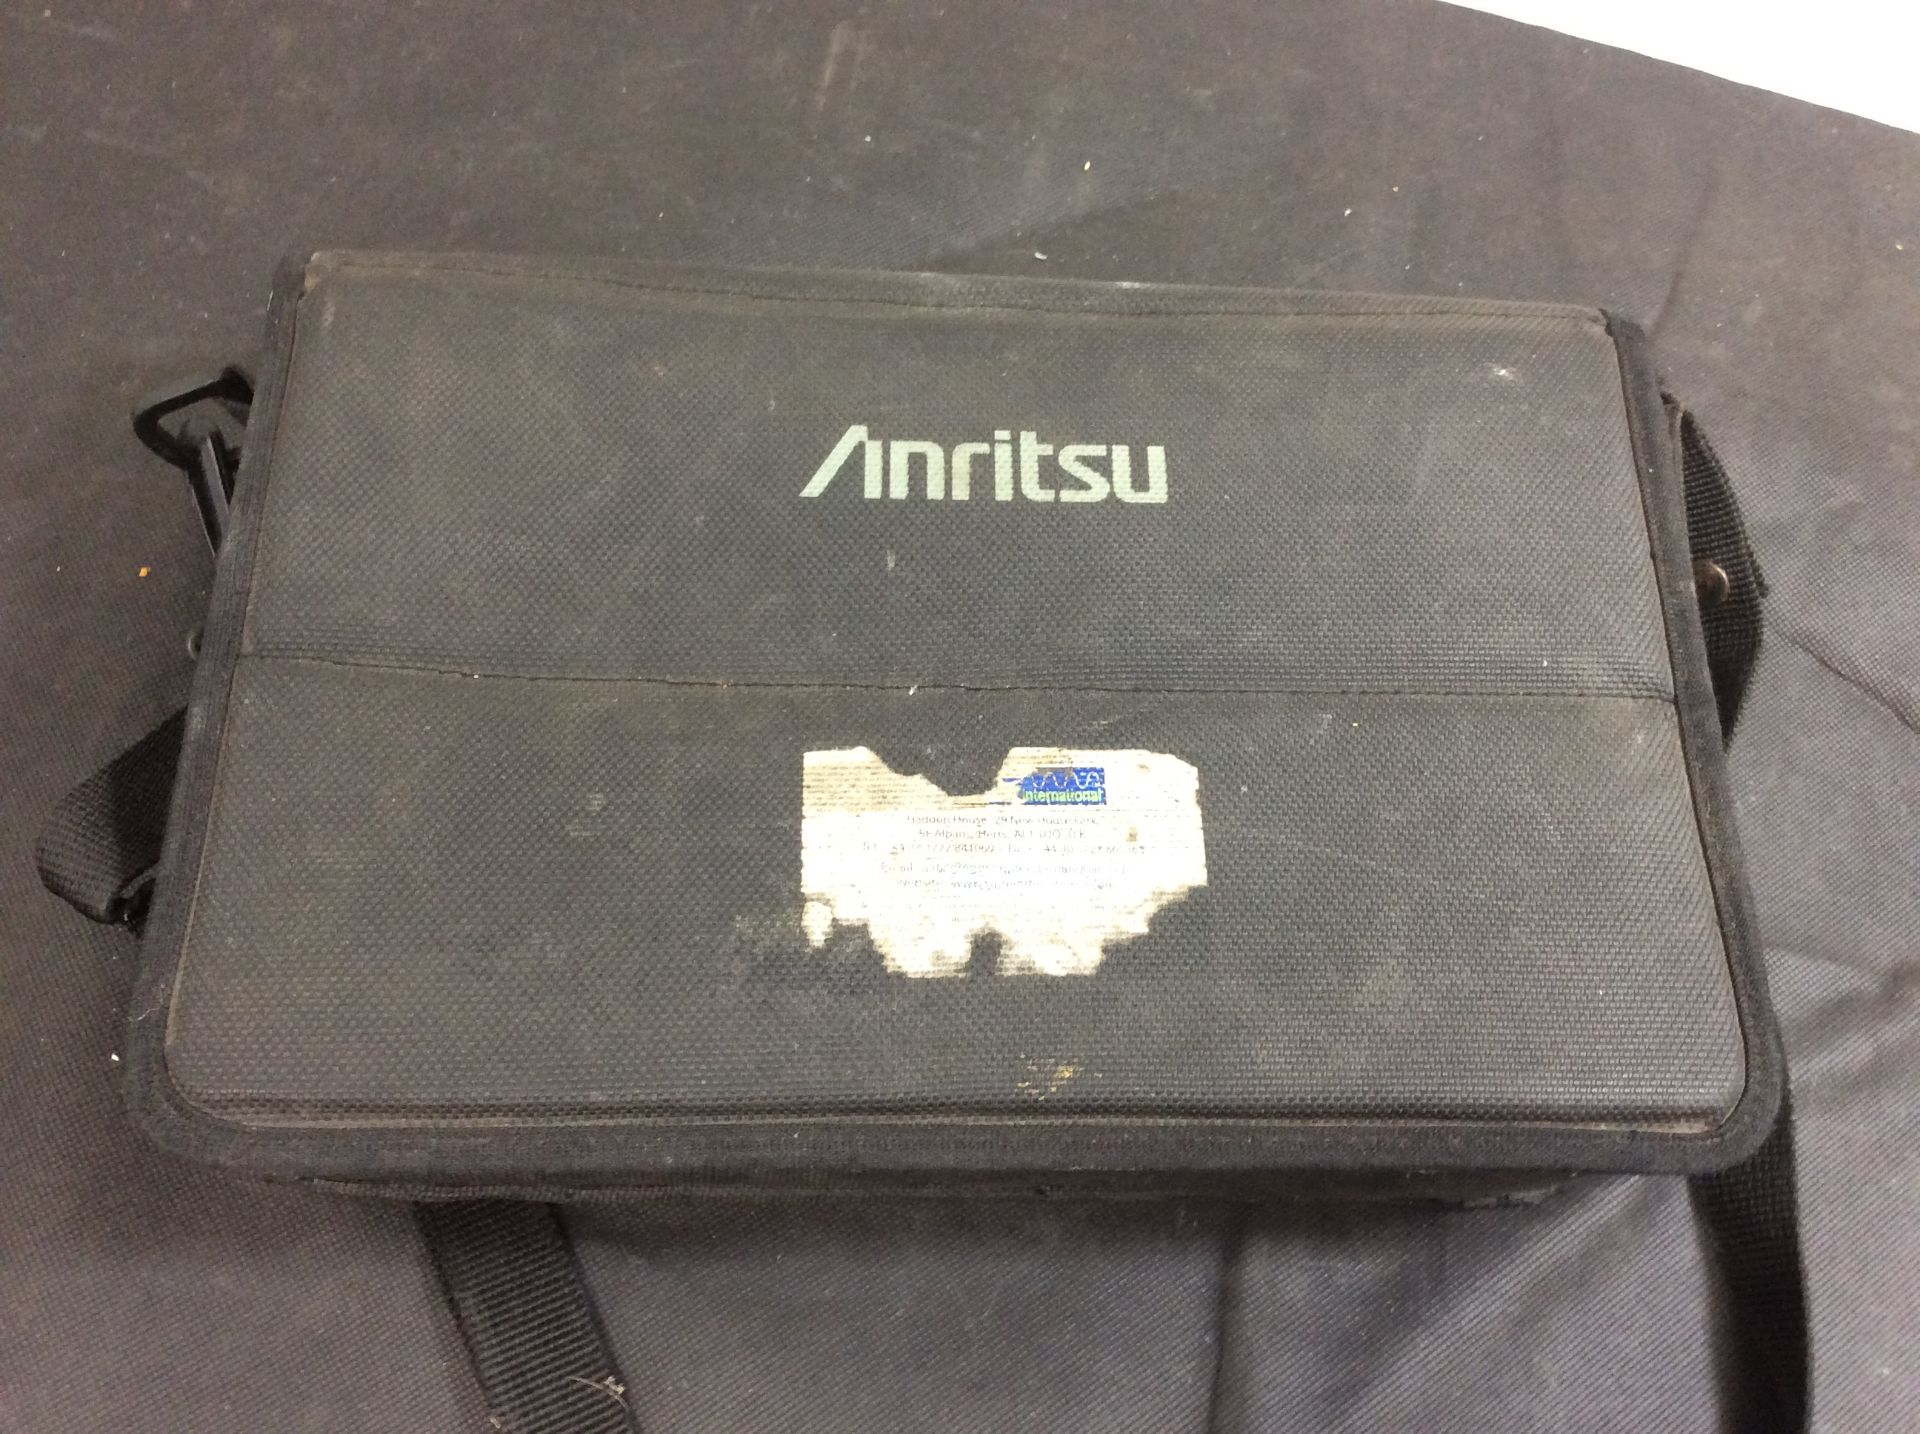 Anritsu sitemaster s251c - Image 2 of 2